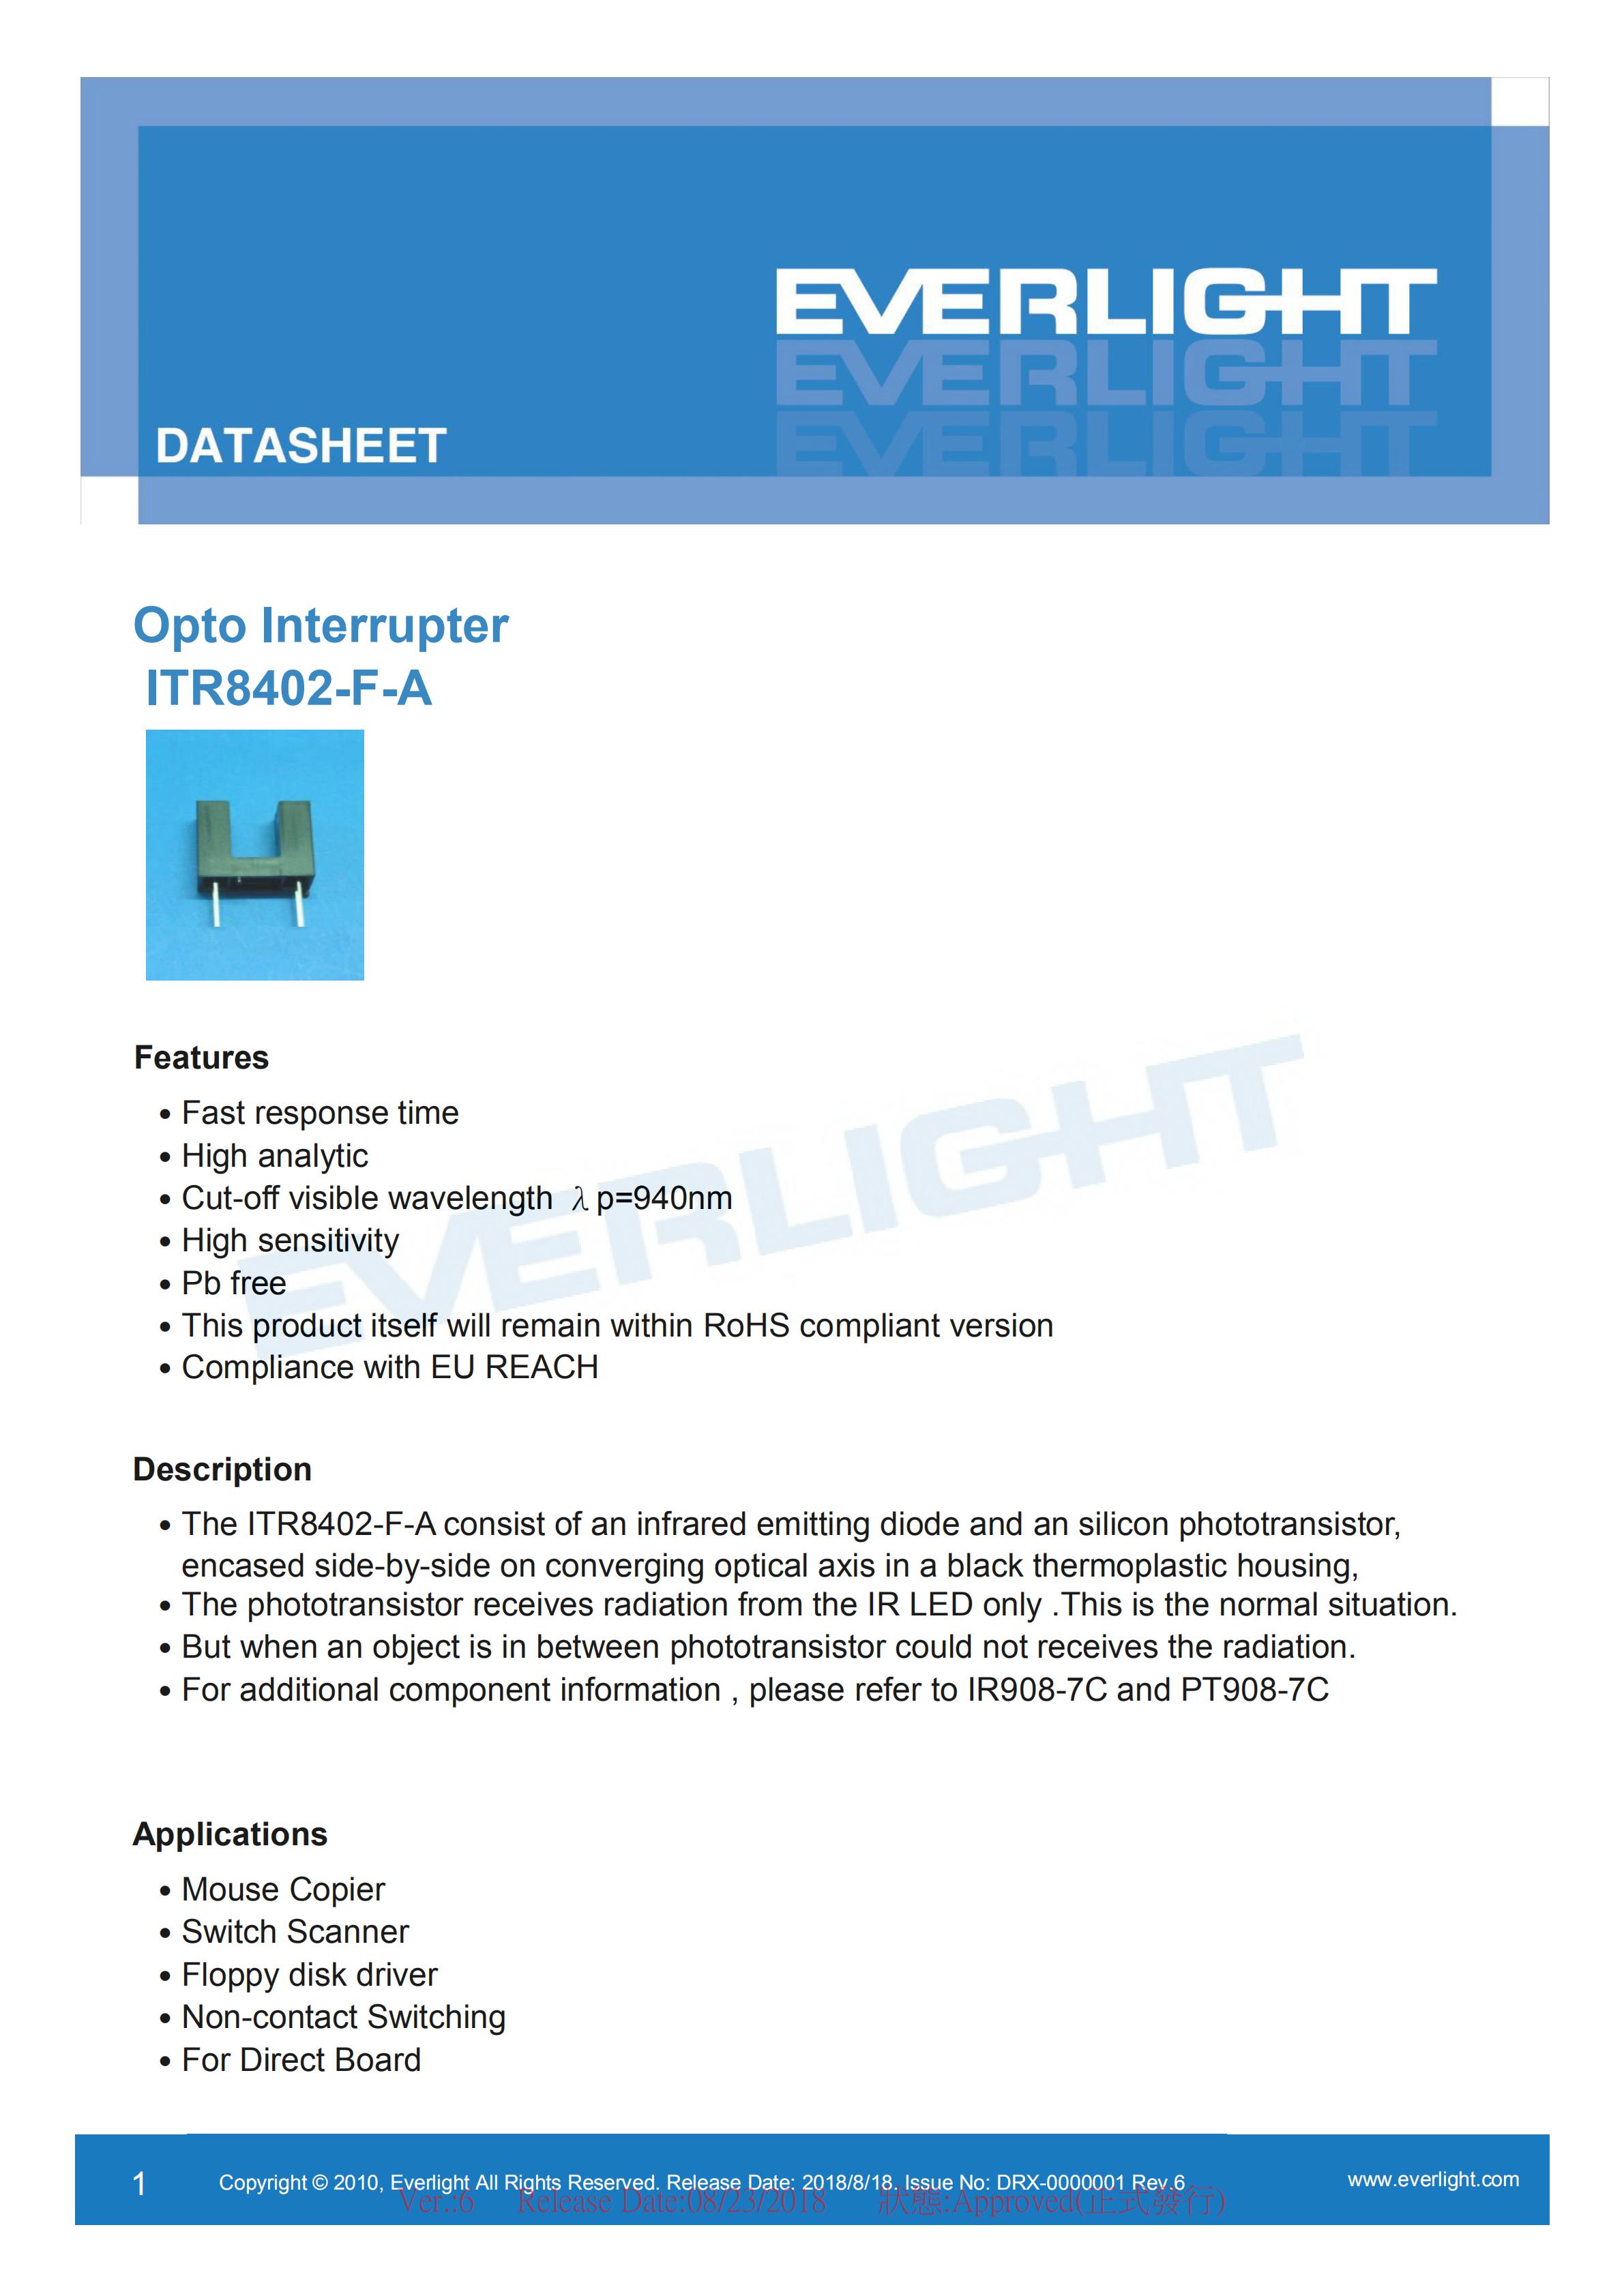 EVERLIGHT Optical Switch ITR8402-F-A Opto Interrupter